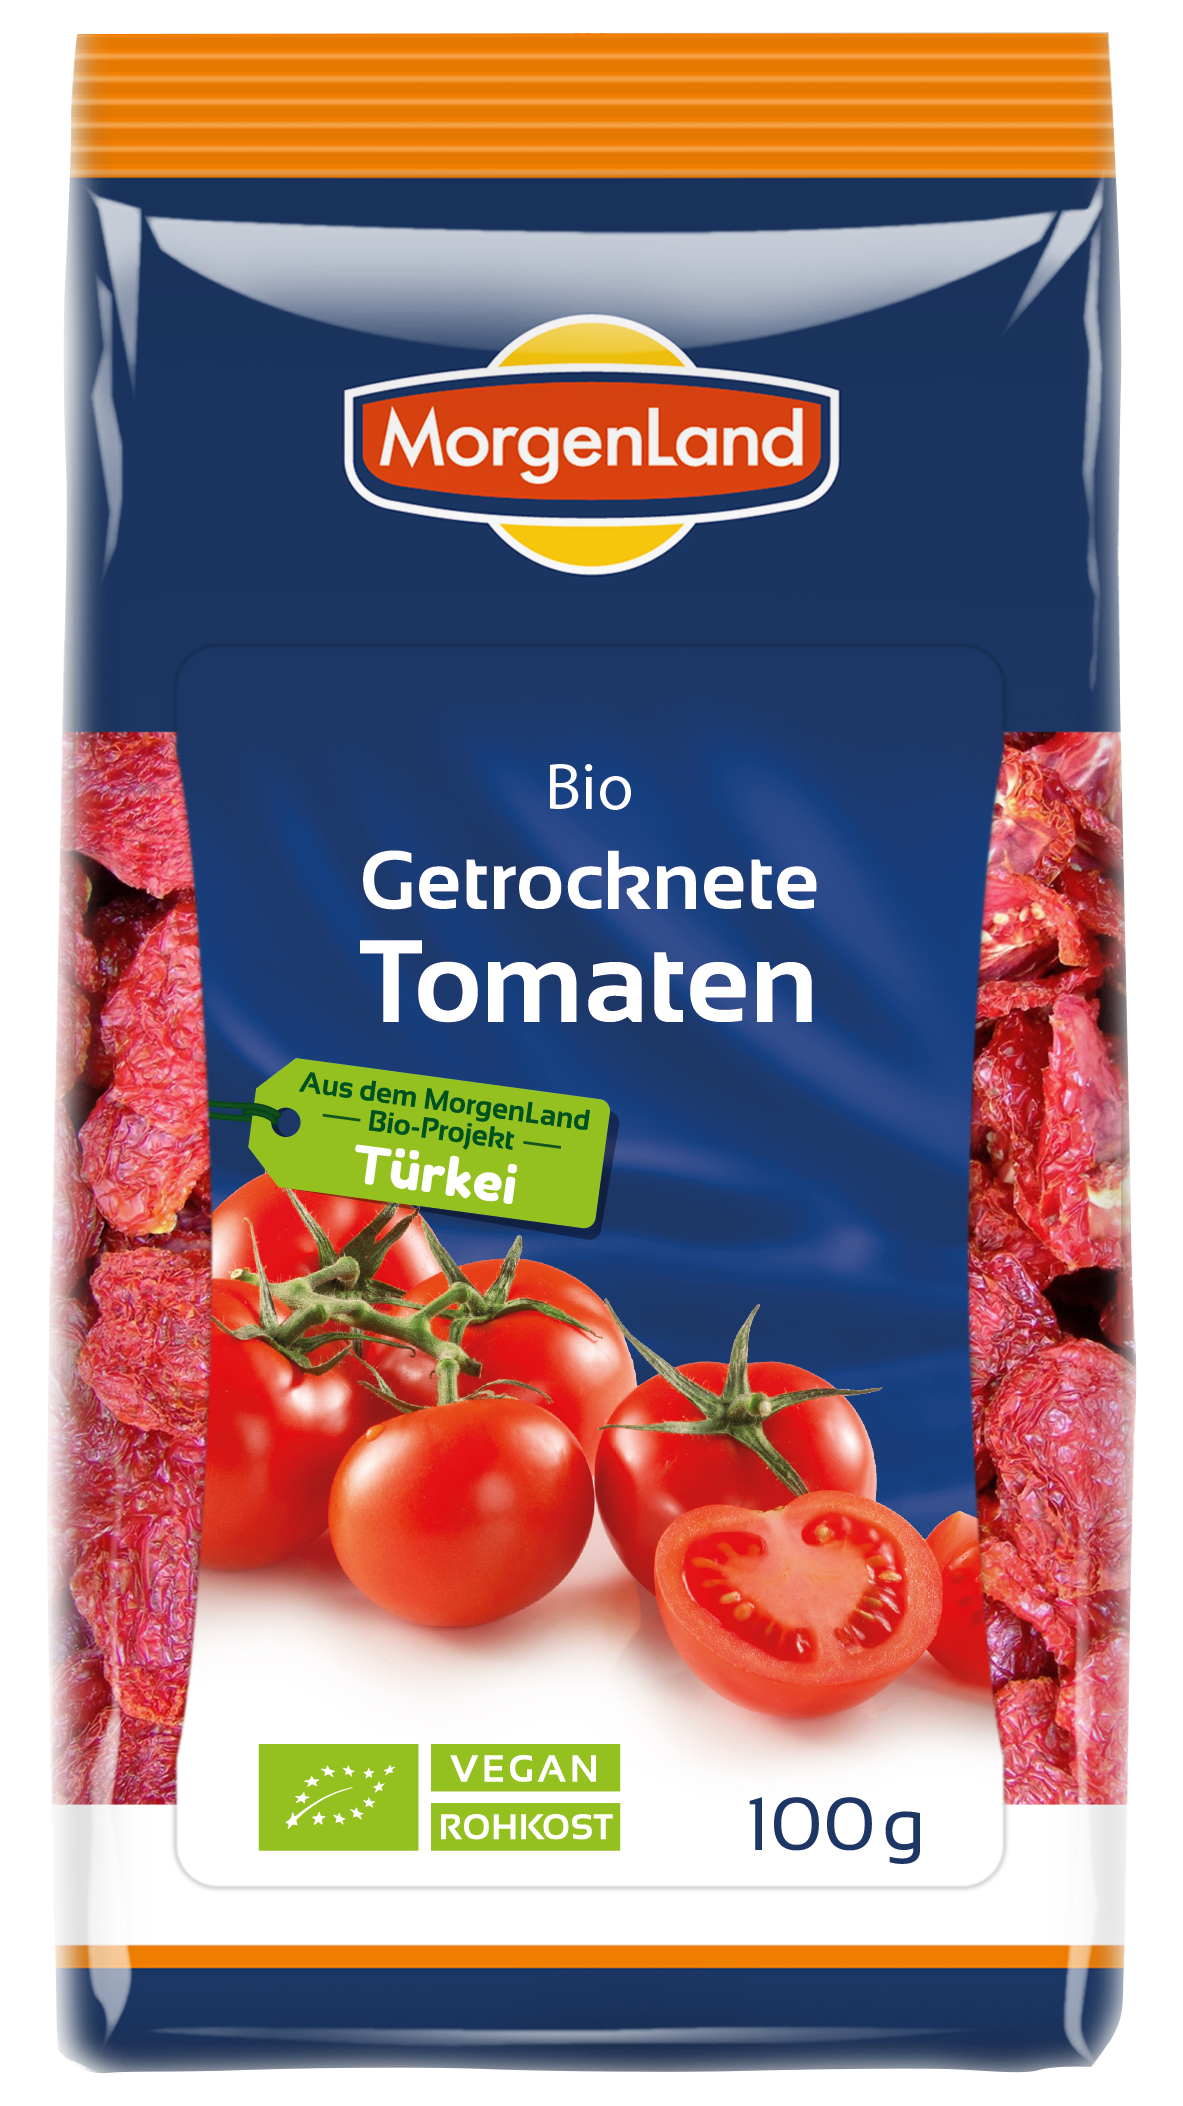 MorgenLand Getrocknete Tomaten 100g/nl